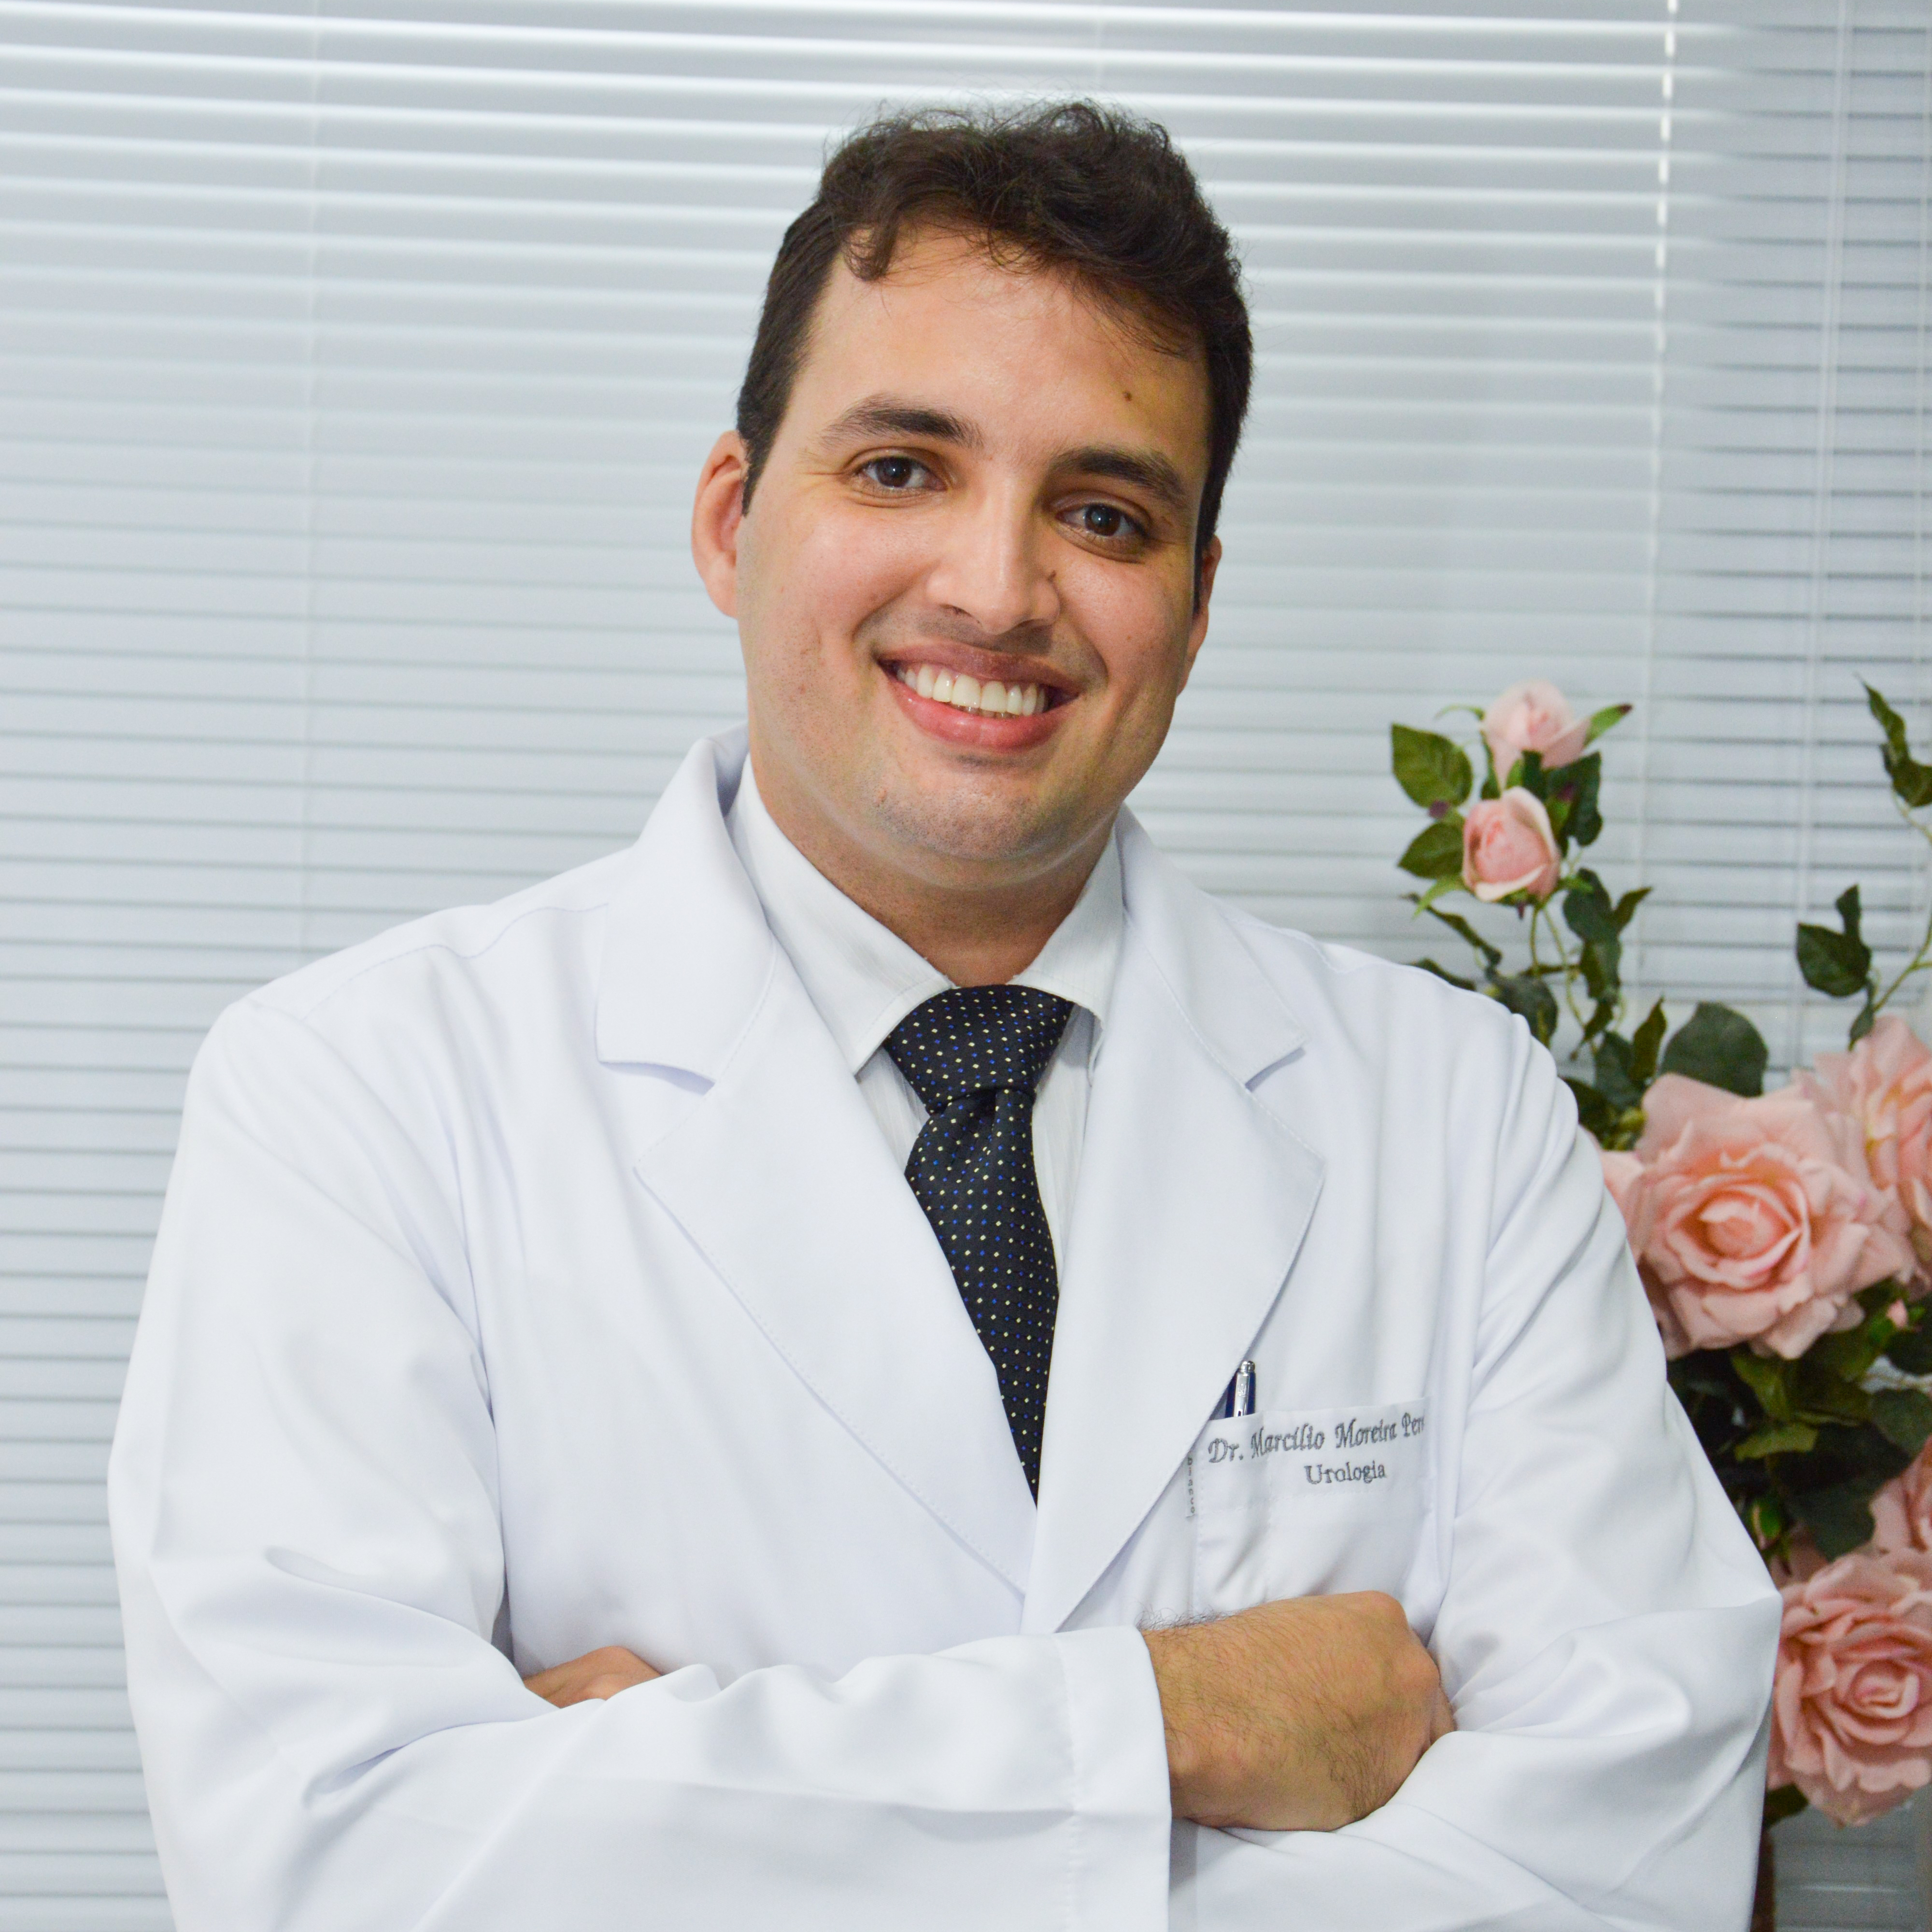 Dr. Marclio Moreira Pereira